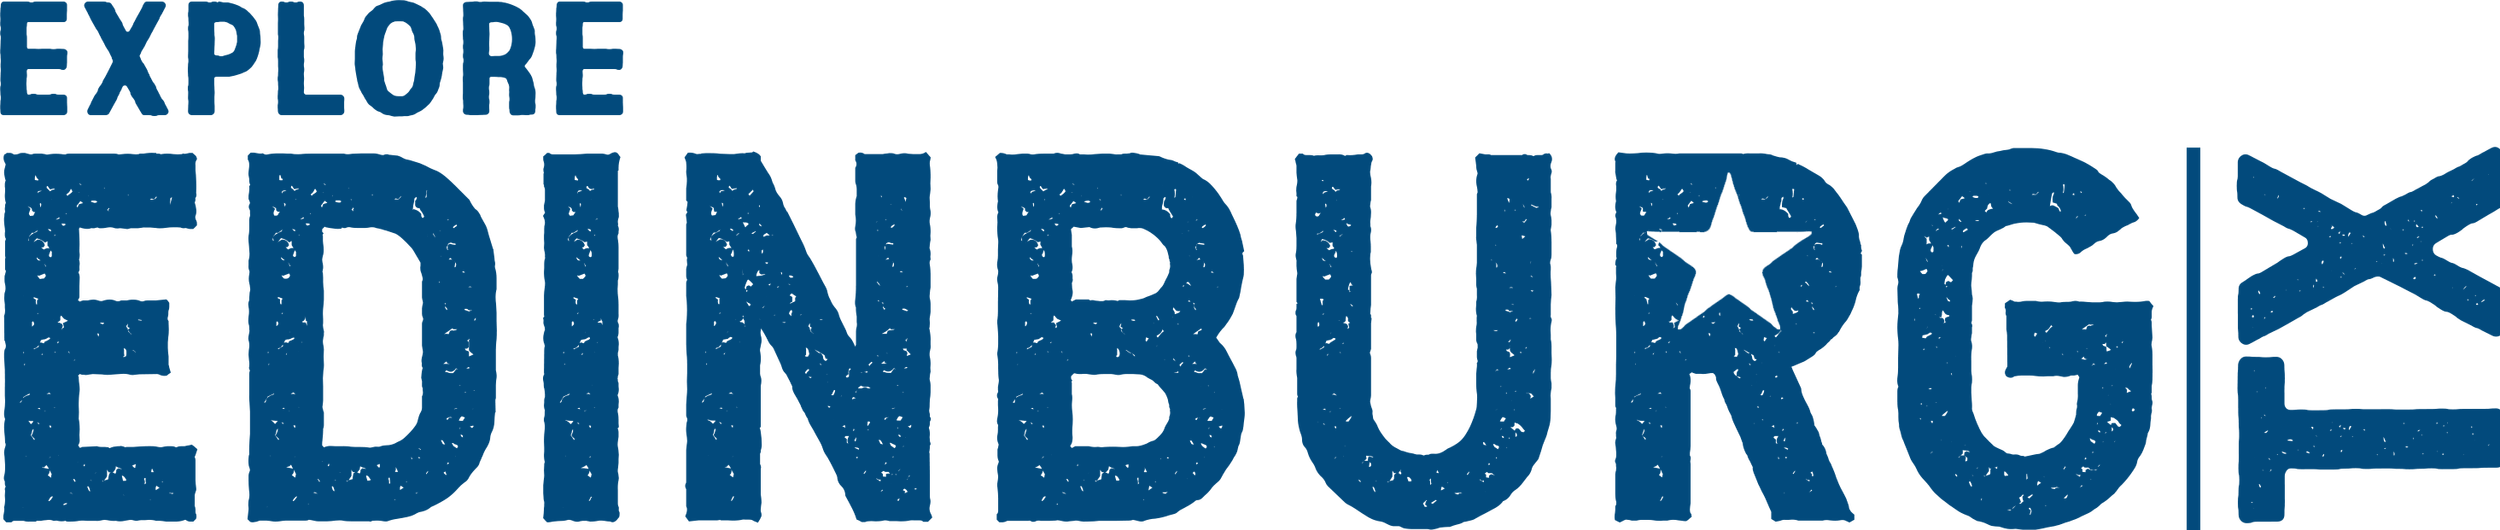 Explore-Edinburg-Blue-Logo.png